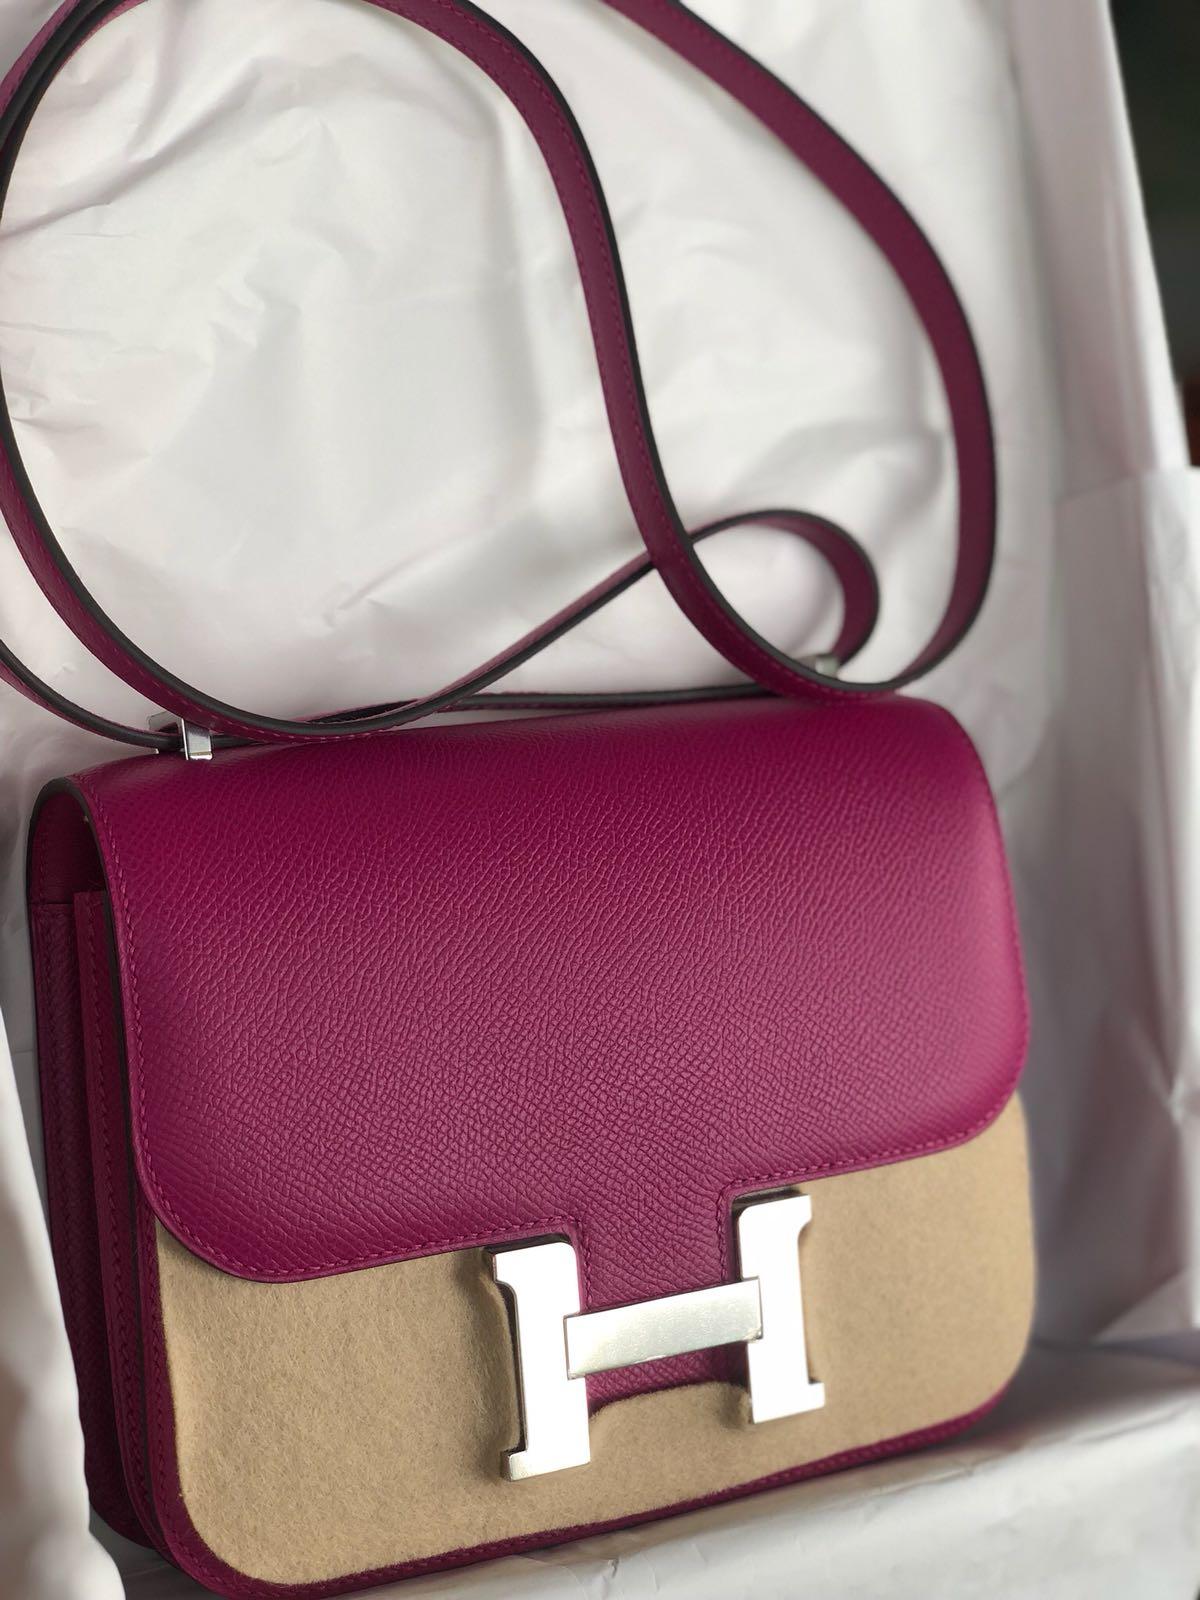 New never worn Hermes Bag
Constance
Size mini
Leather Epsom
Color Rose pourpre
Palladium hardware

Comes full set: 
Original box
Invoice
Raincoat
Padlock & Keys
Dustbag